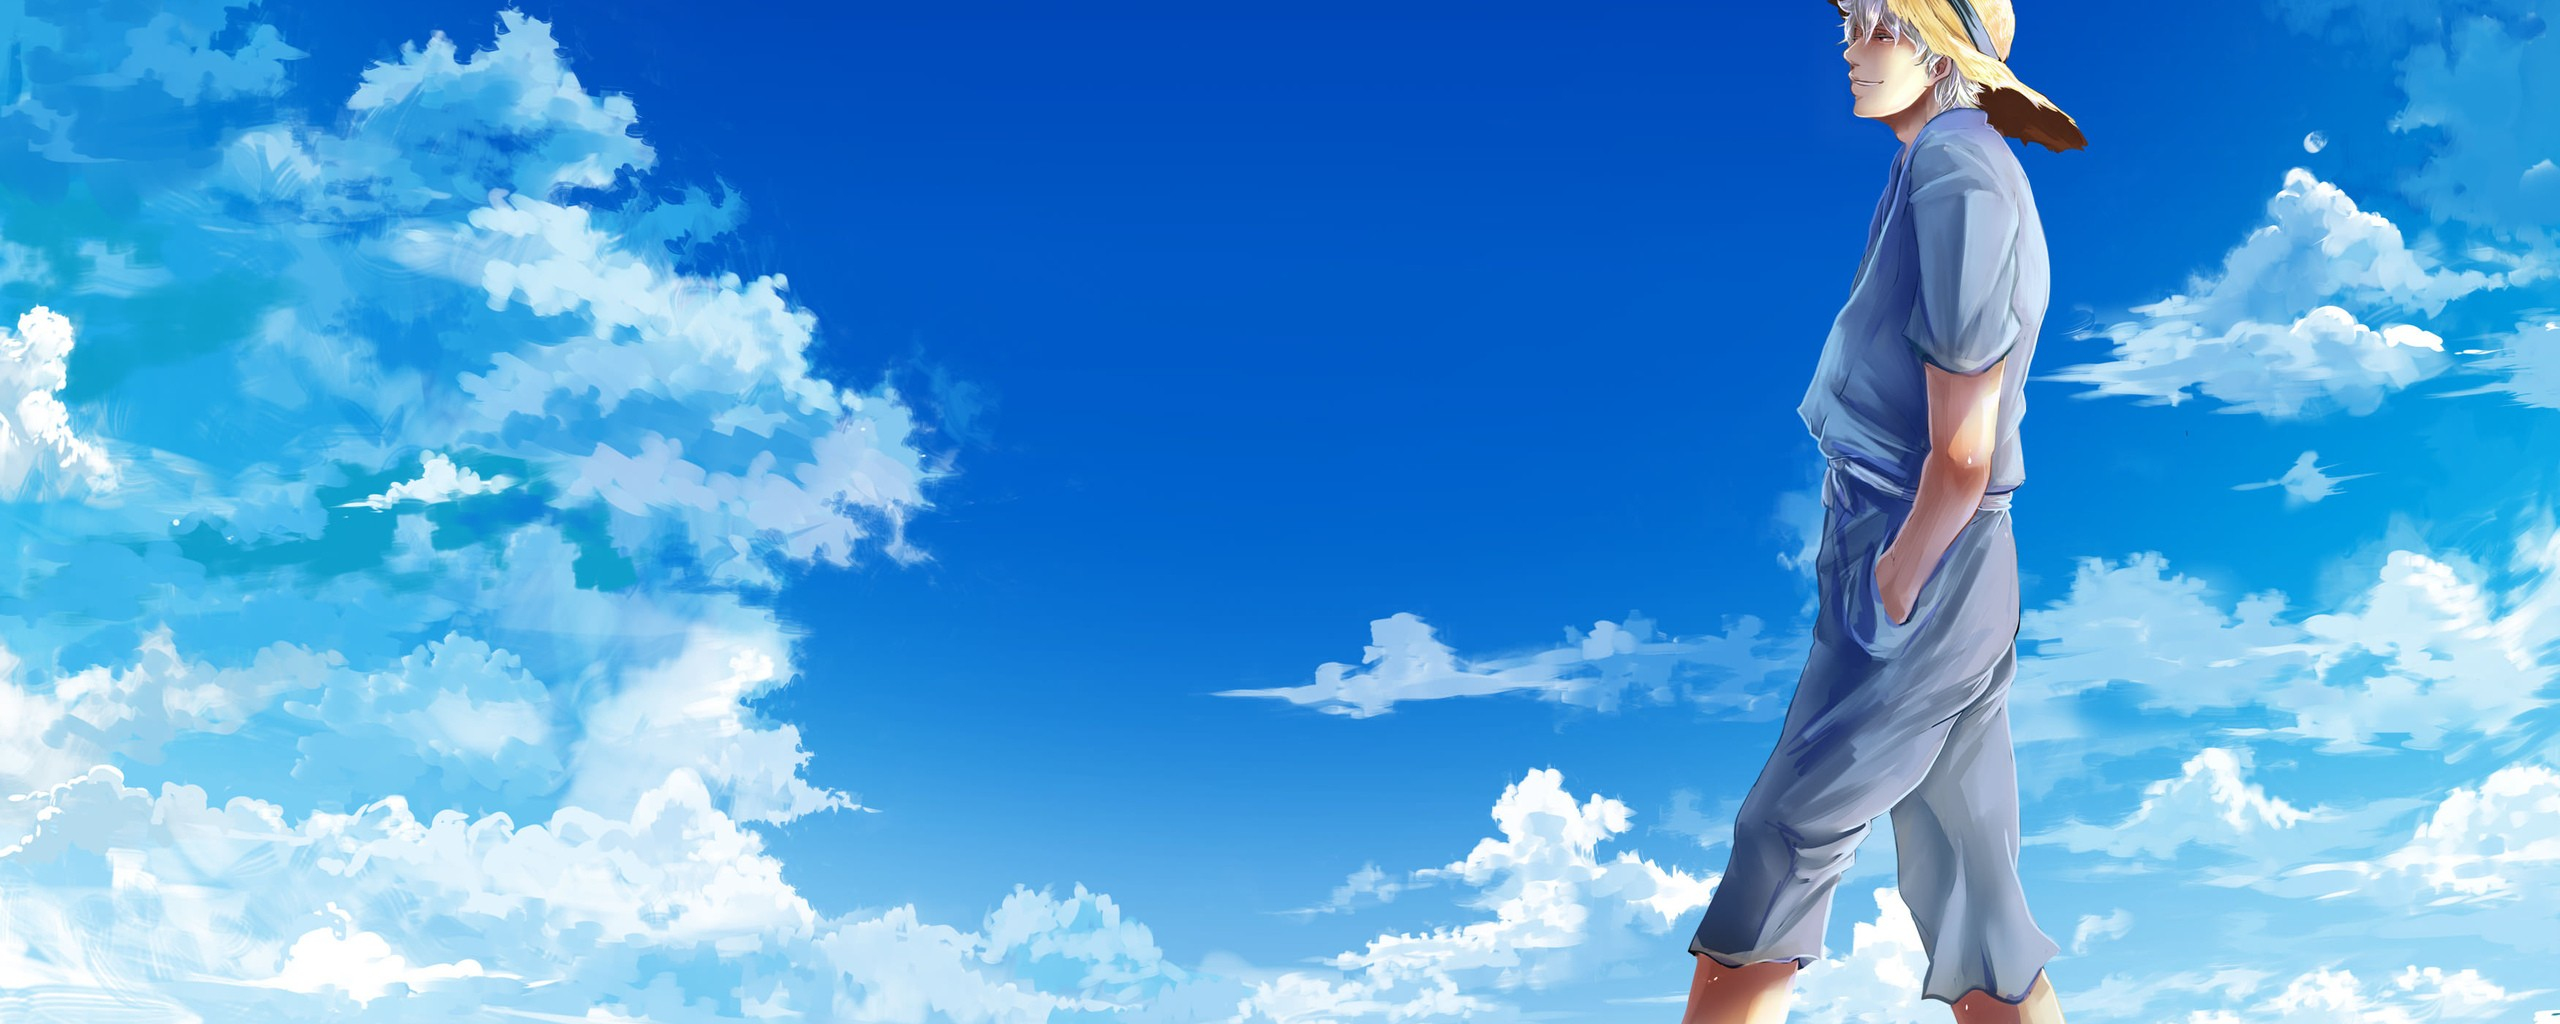 Desktop Wallpaper Natsuki Subaru Re Zero Anime Boy Hd Image Picture Background Fnheau